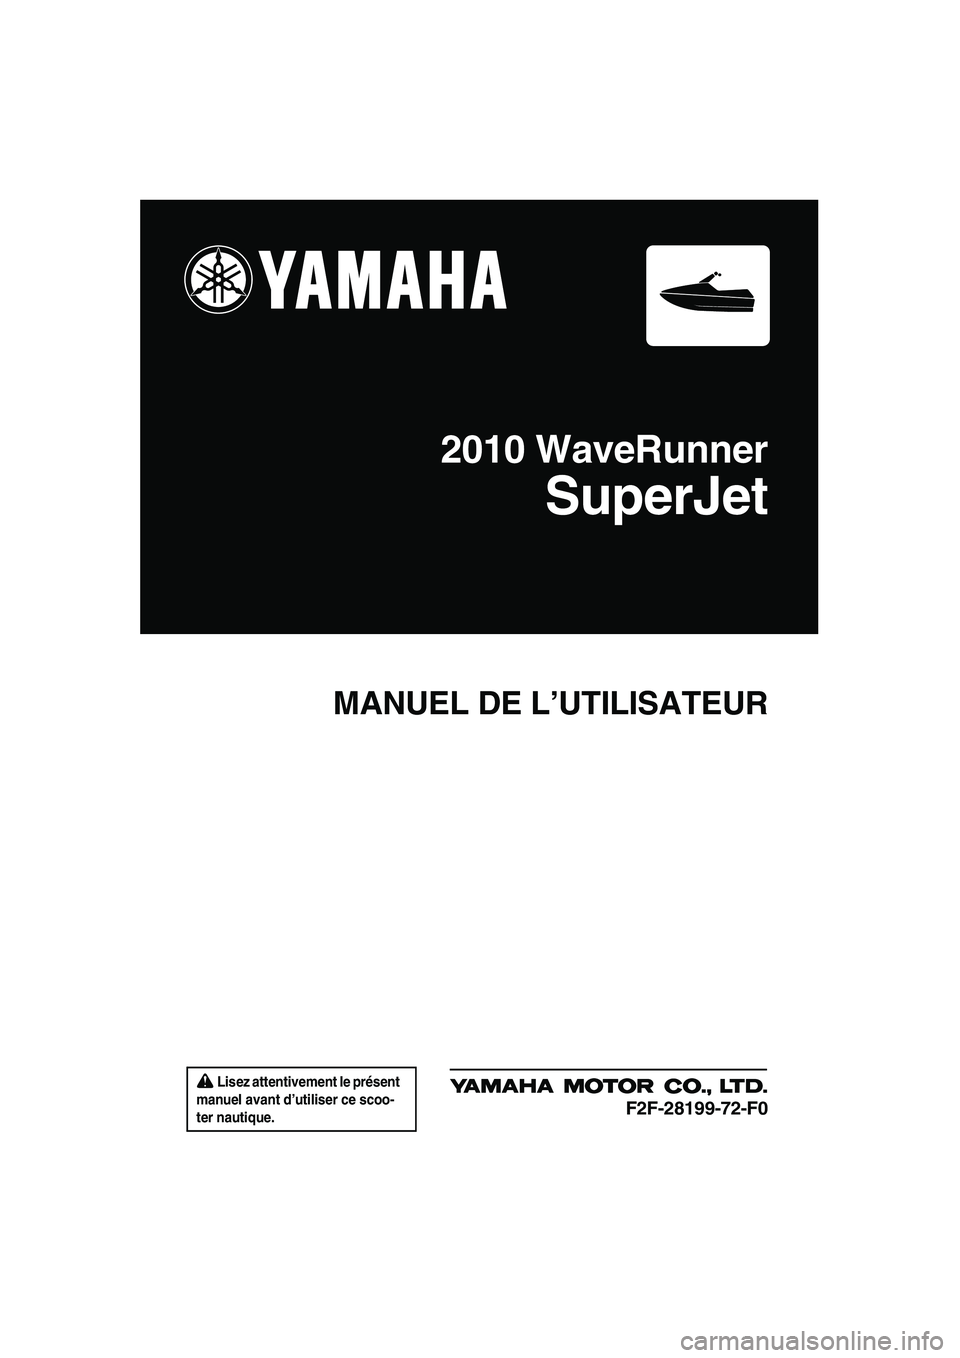 YAMAHA SUPERJET 2010  Notices Demploi (in French)  Lisez attentivement le présent 
manuel avant d’utiliser ce scoo-
ter nautique.
MANUEL DE L’UTILISATEUR
2010 WaveRunner
SuperJet
F2F-28199-72-F0
UF2F72F0.book  Page 1  Wednesday, May 27, 2009  11